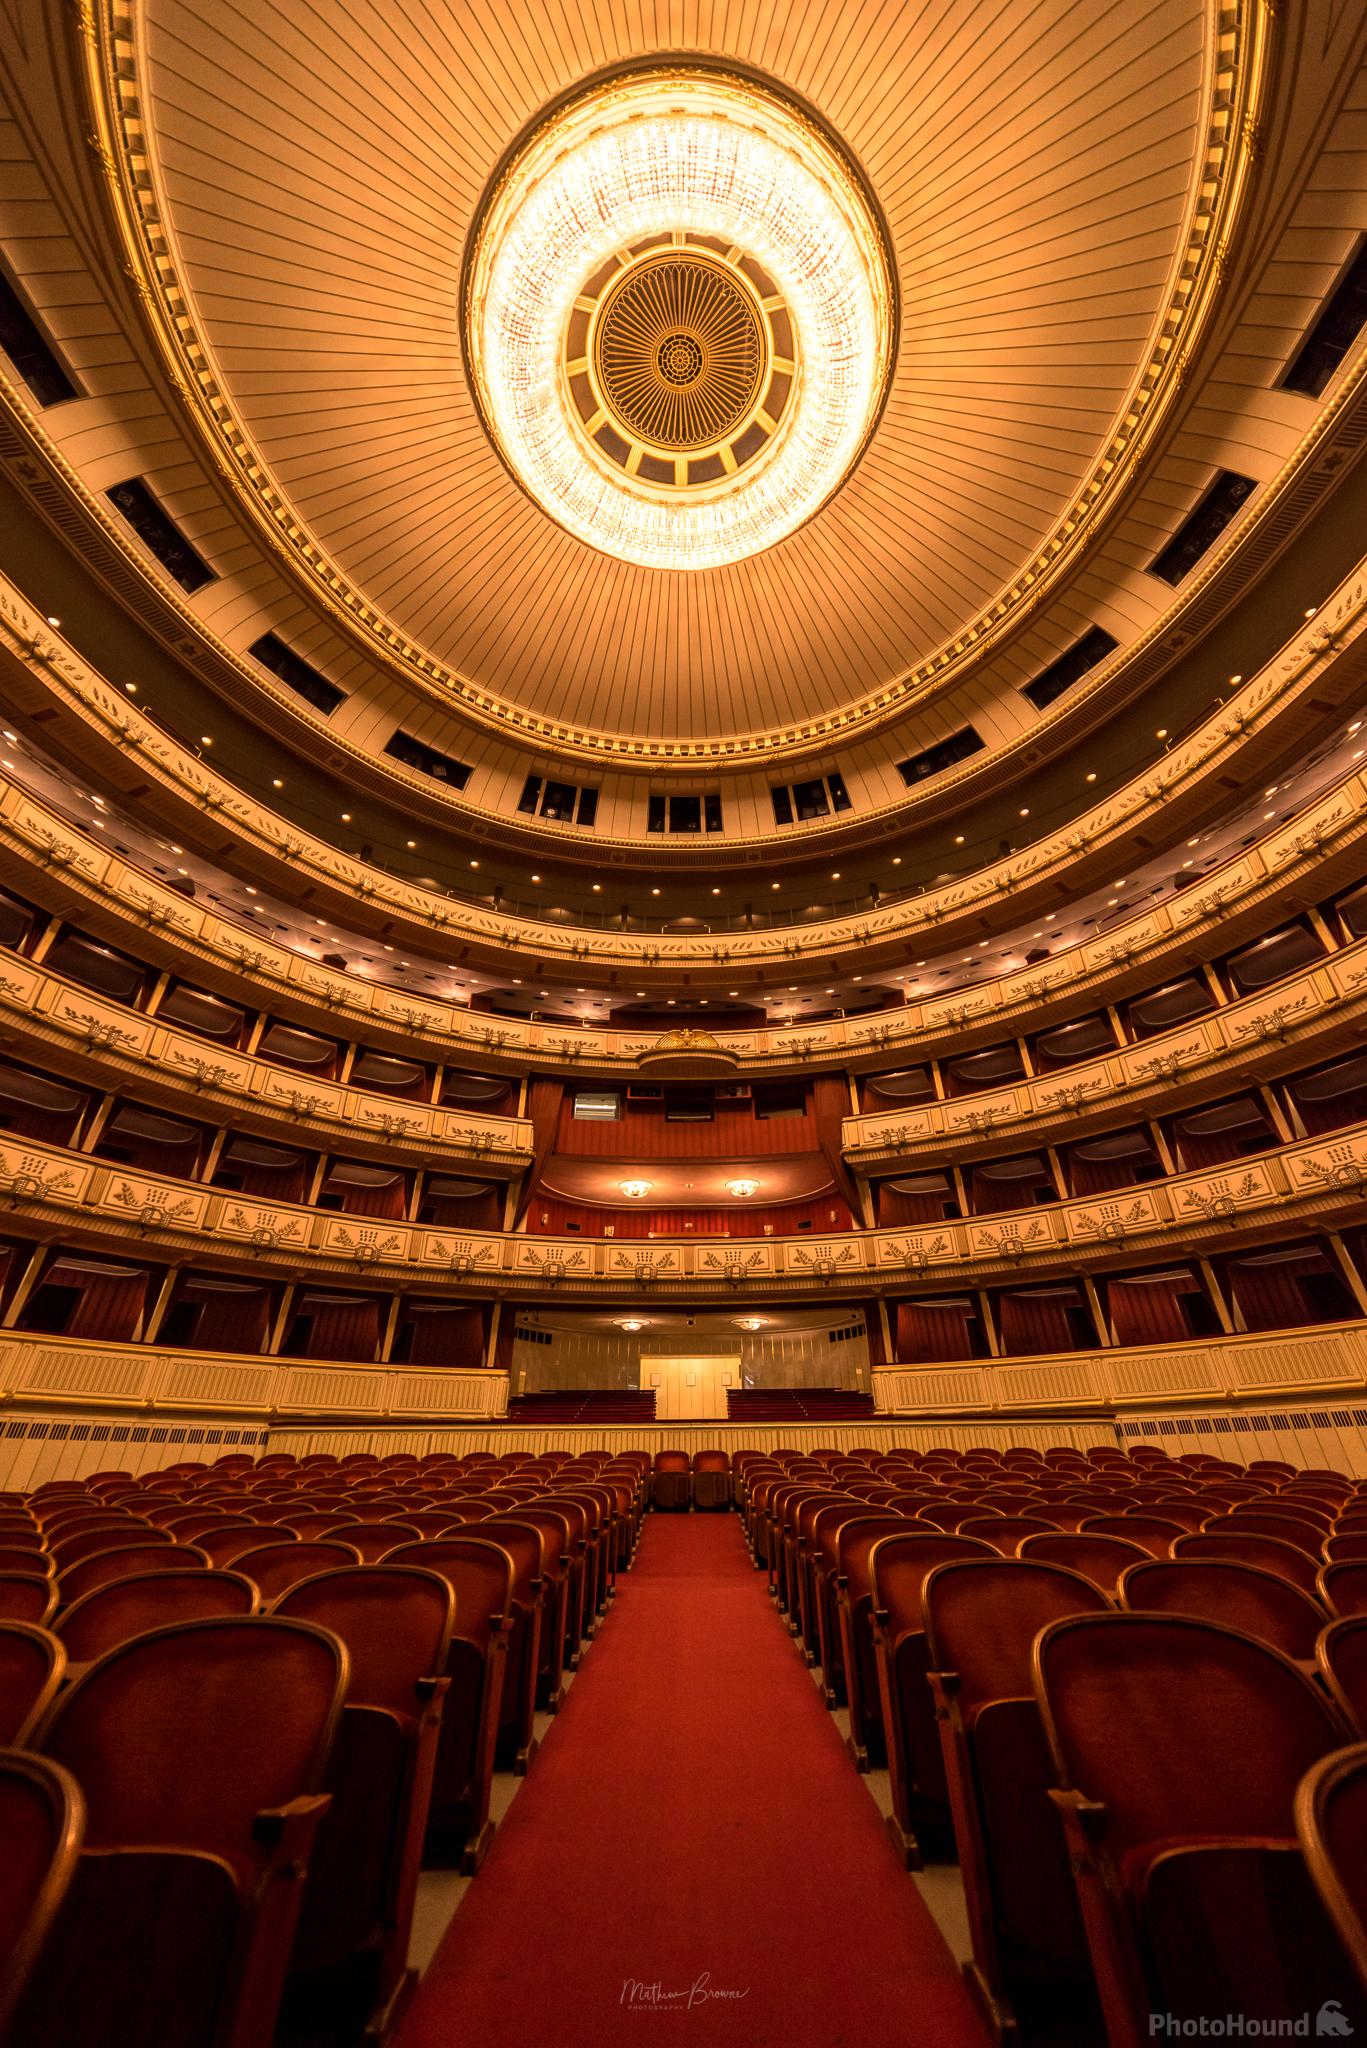 Image of Vienna State Opera - Interior by Mathew Browne